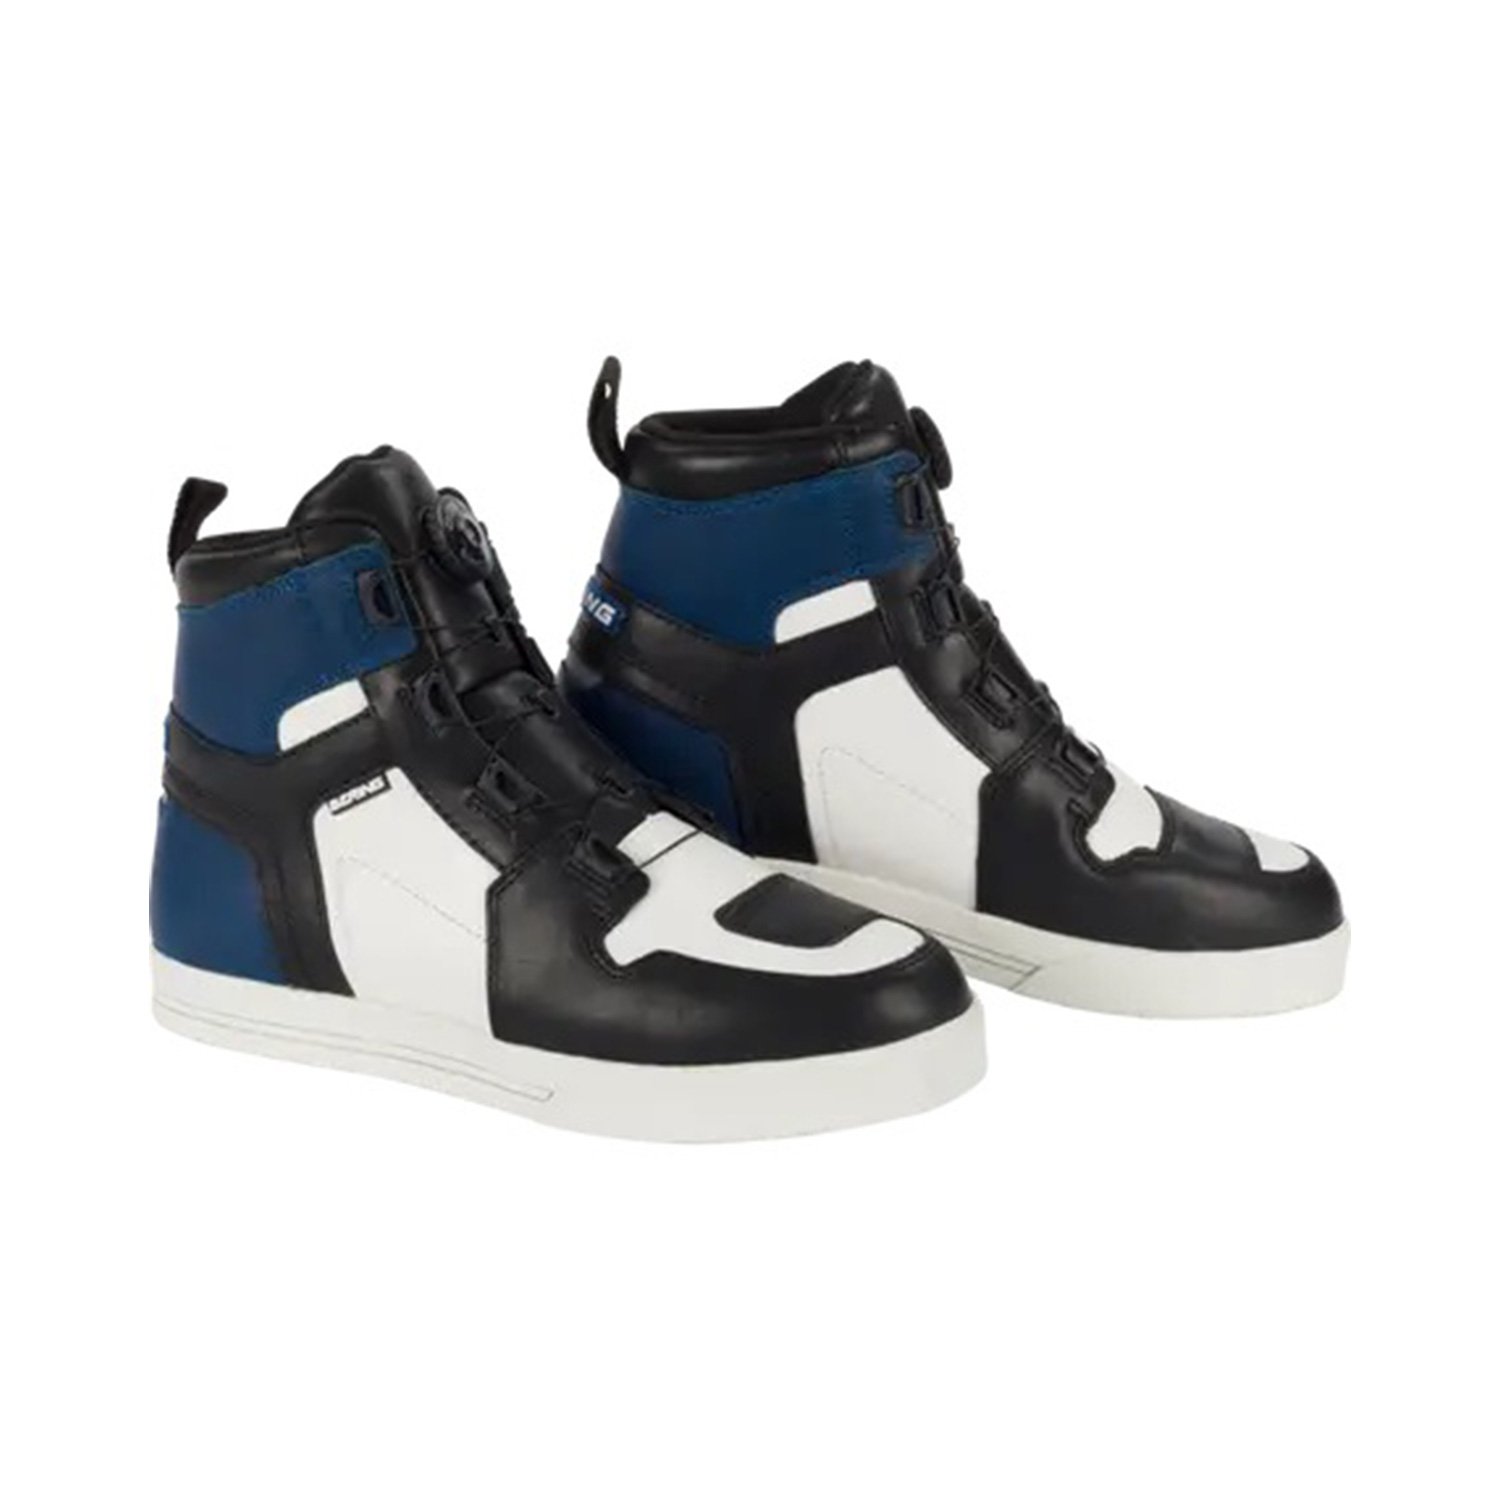 Image of Bering Sneakers Reflex A-Top Black White Blue Size 46 EN